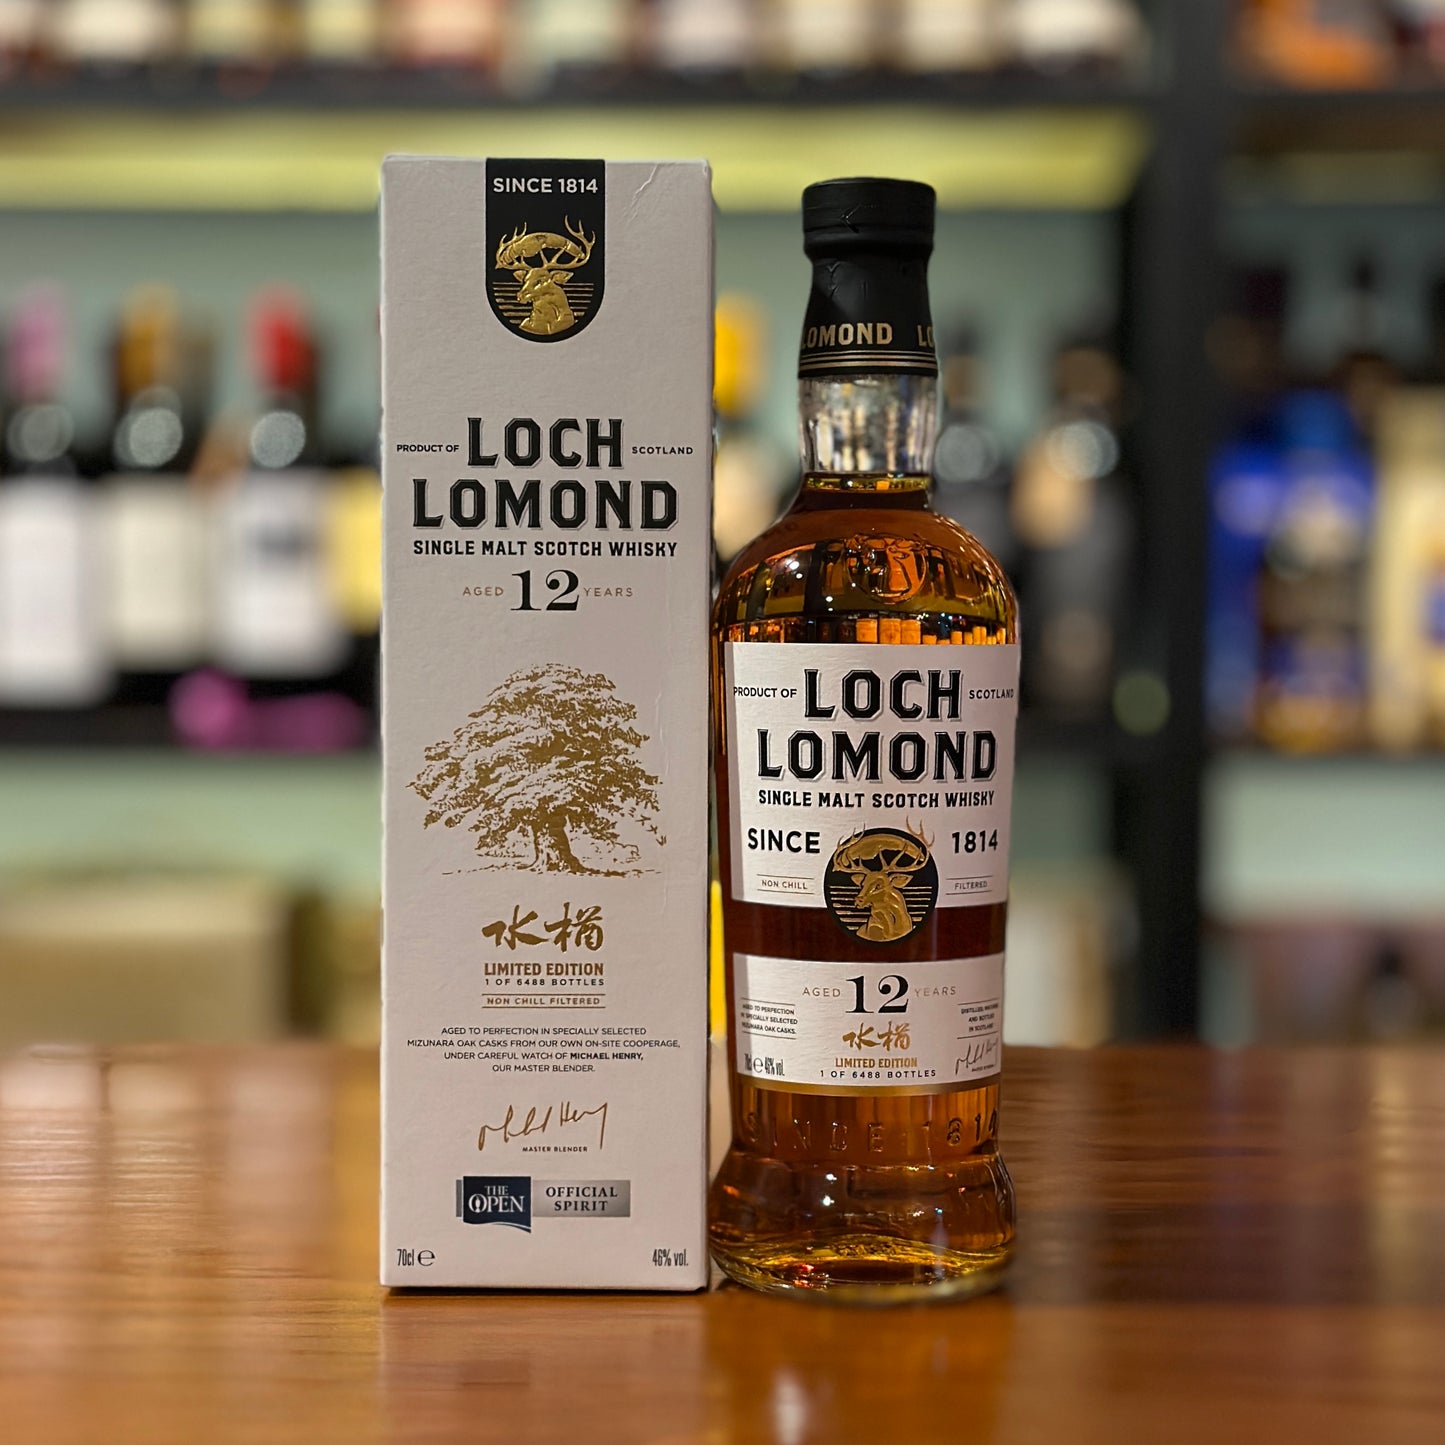 Loch Lomond 12 Year Old Limited Edition Single Malt Scotch Whisky